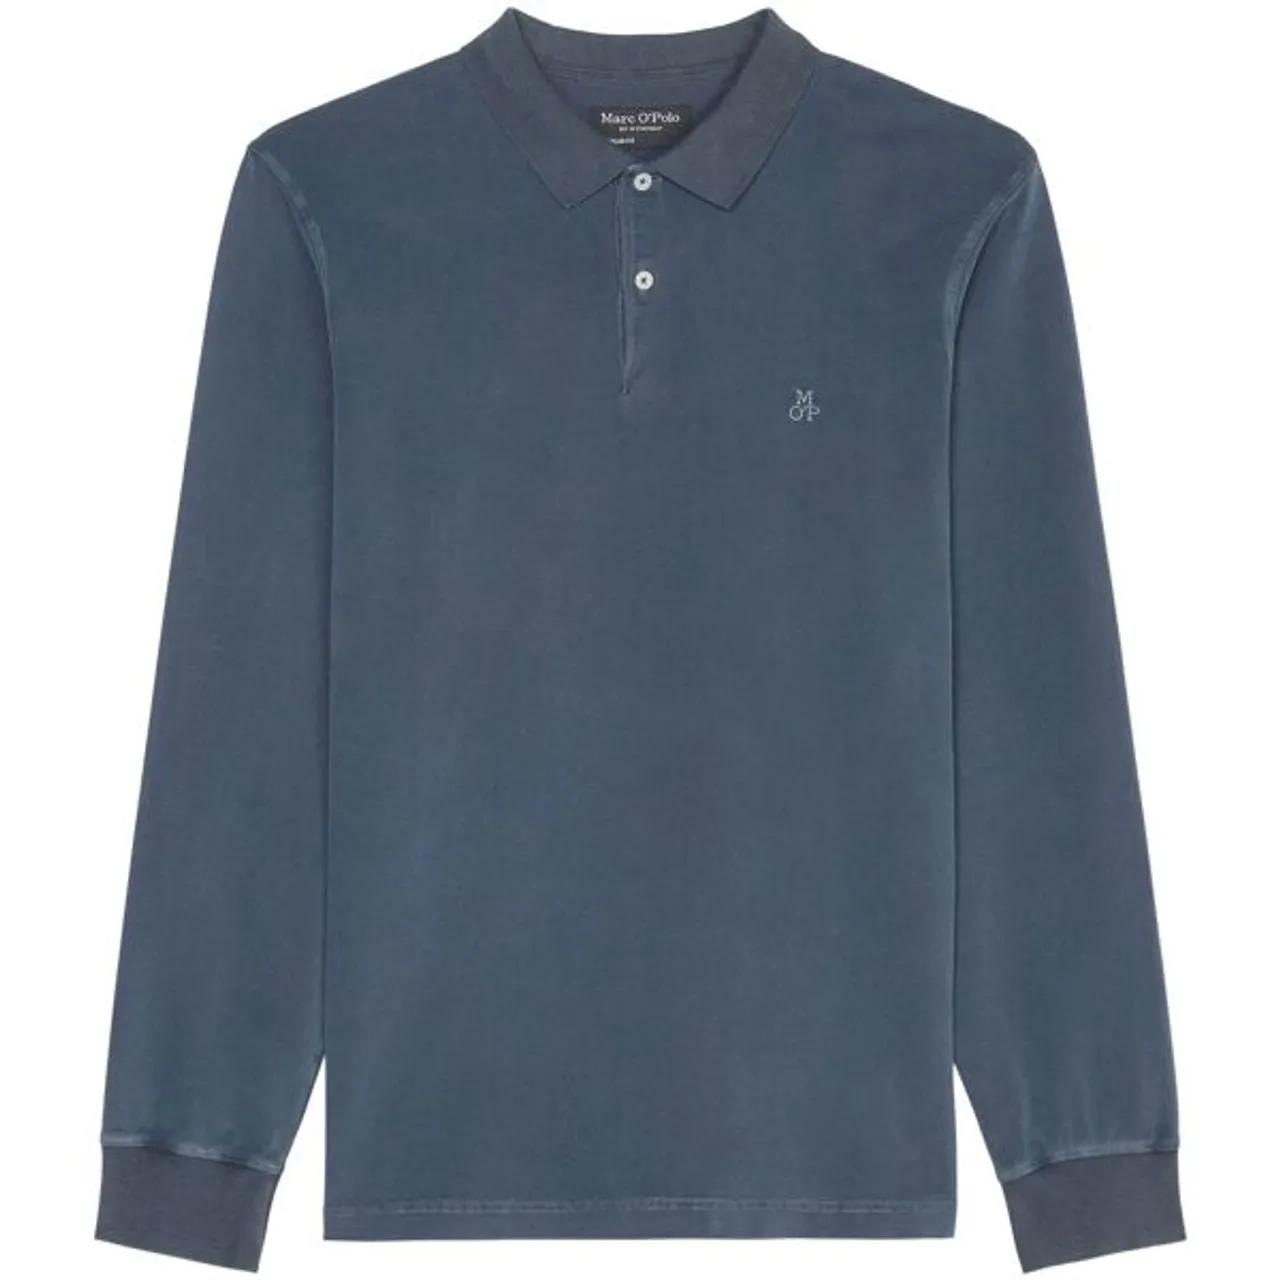 Langarm-Poloshirt MARC O'POLO Gr. XS, blau (dark navy) Herren Shirts Poloshirts im Washed-Look